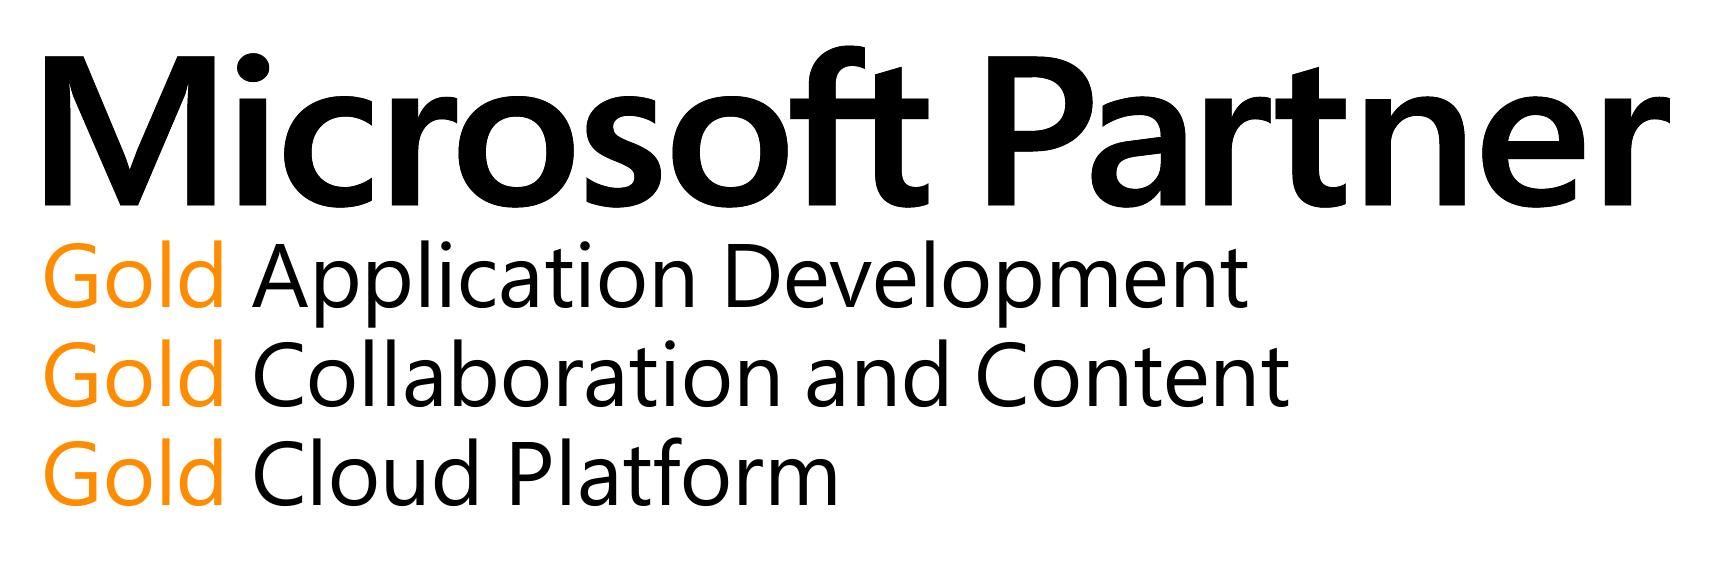 AvePoint's three Microsoft gold competencies